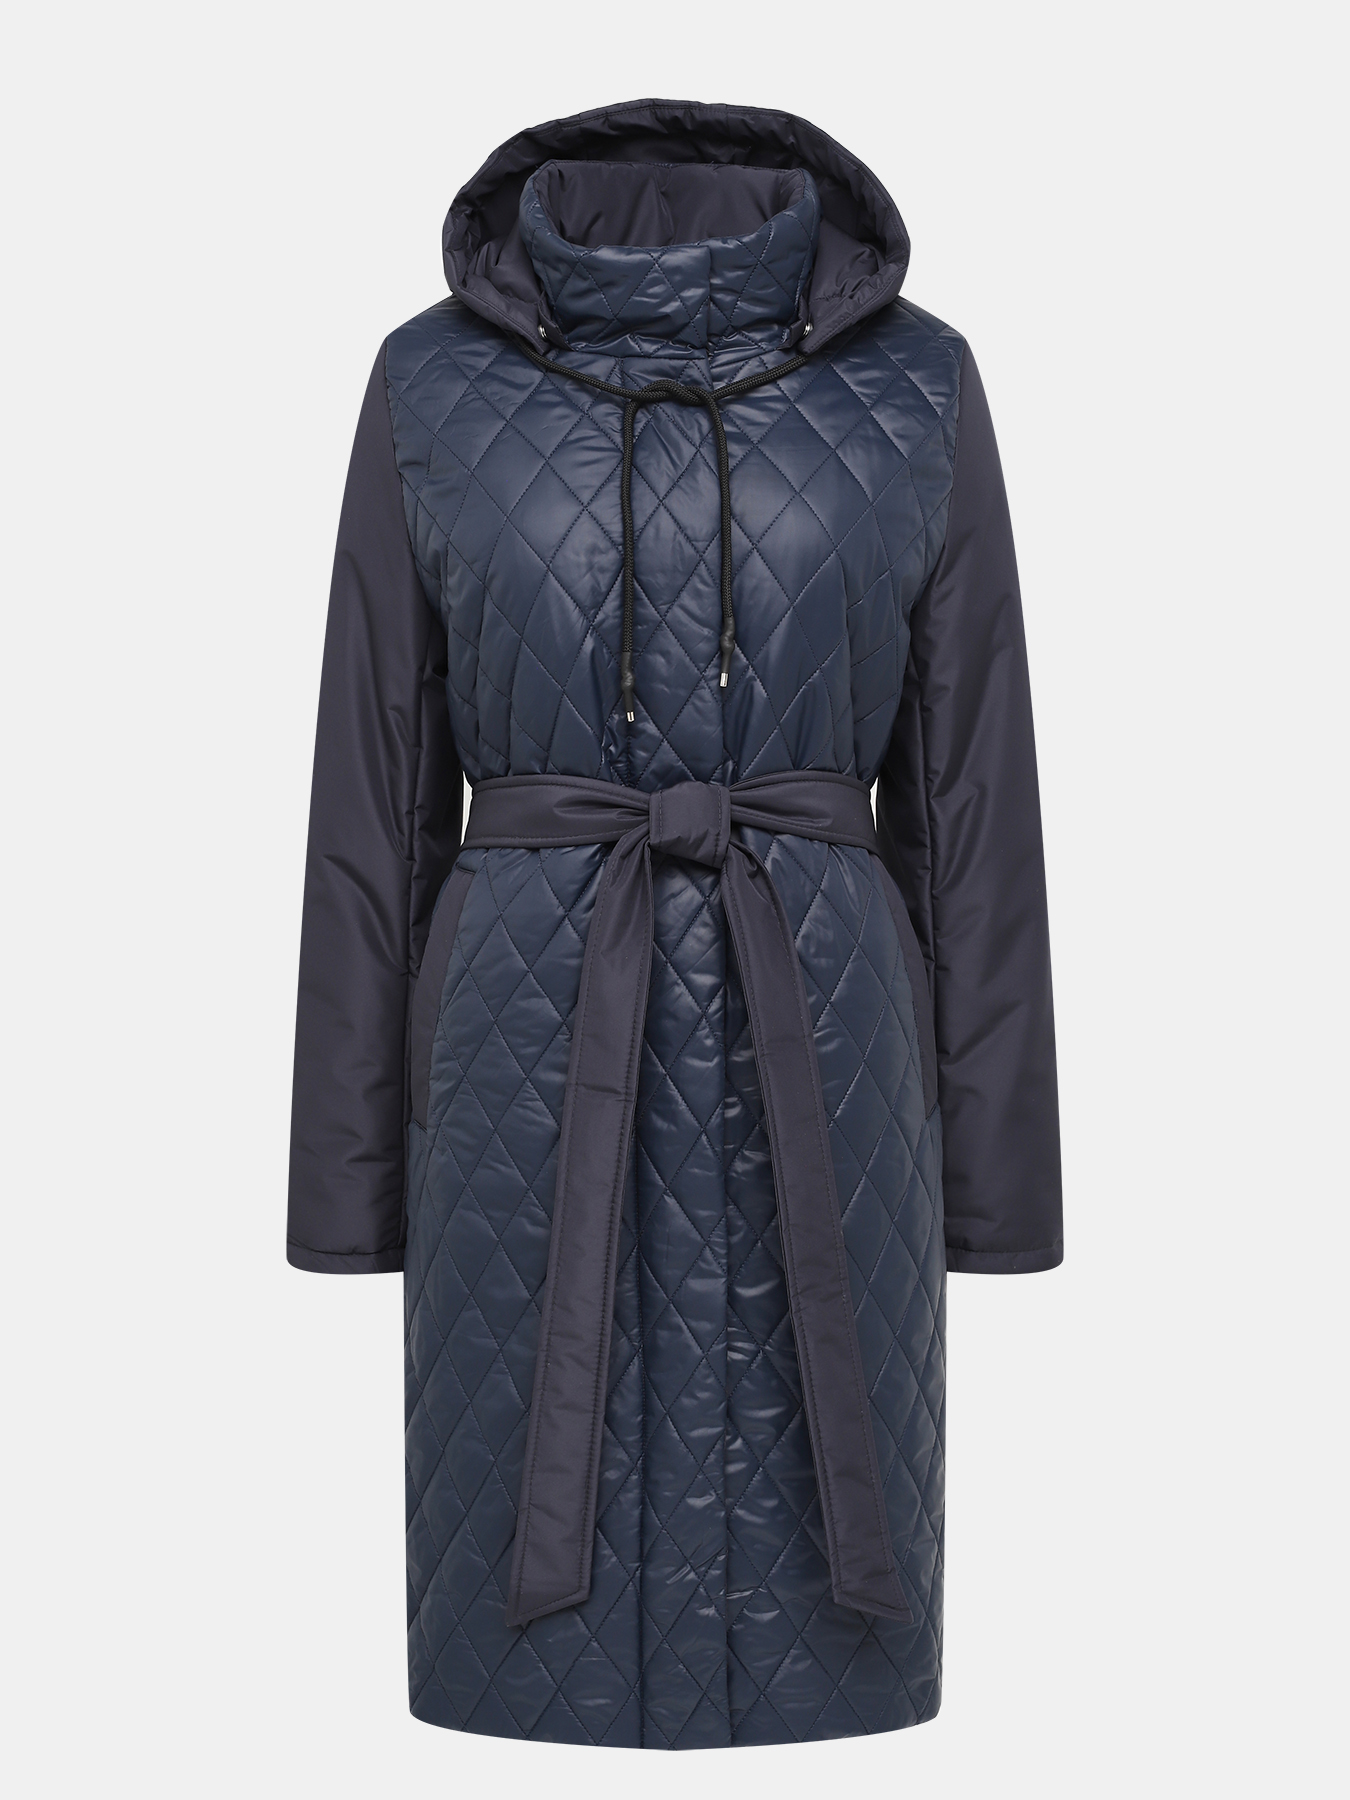 Пальто зимнее Maritta 433613-021, цвет темно-синий, размер 46